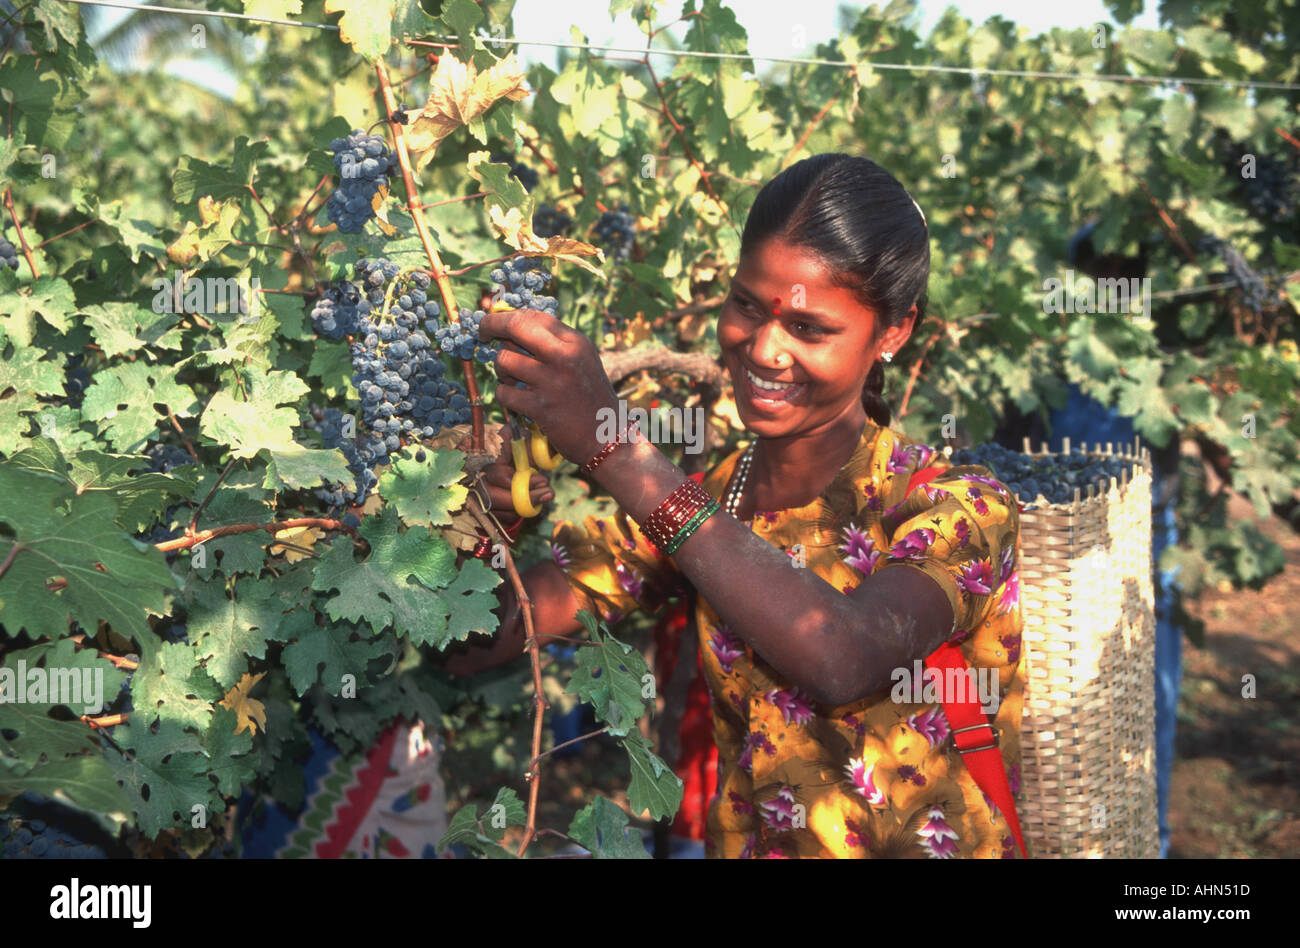 Grape picker Chateau Indage wine estate India Stock Photo